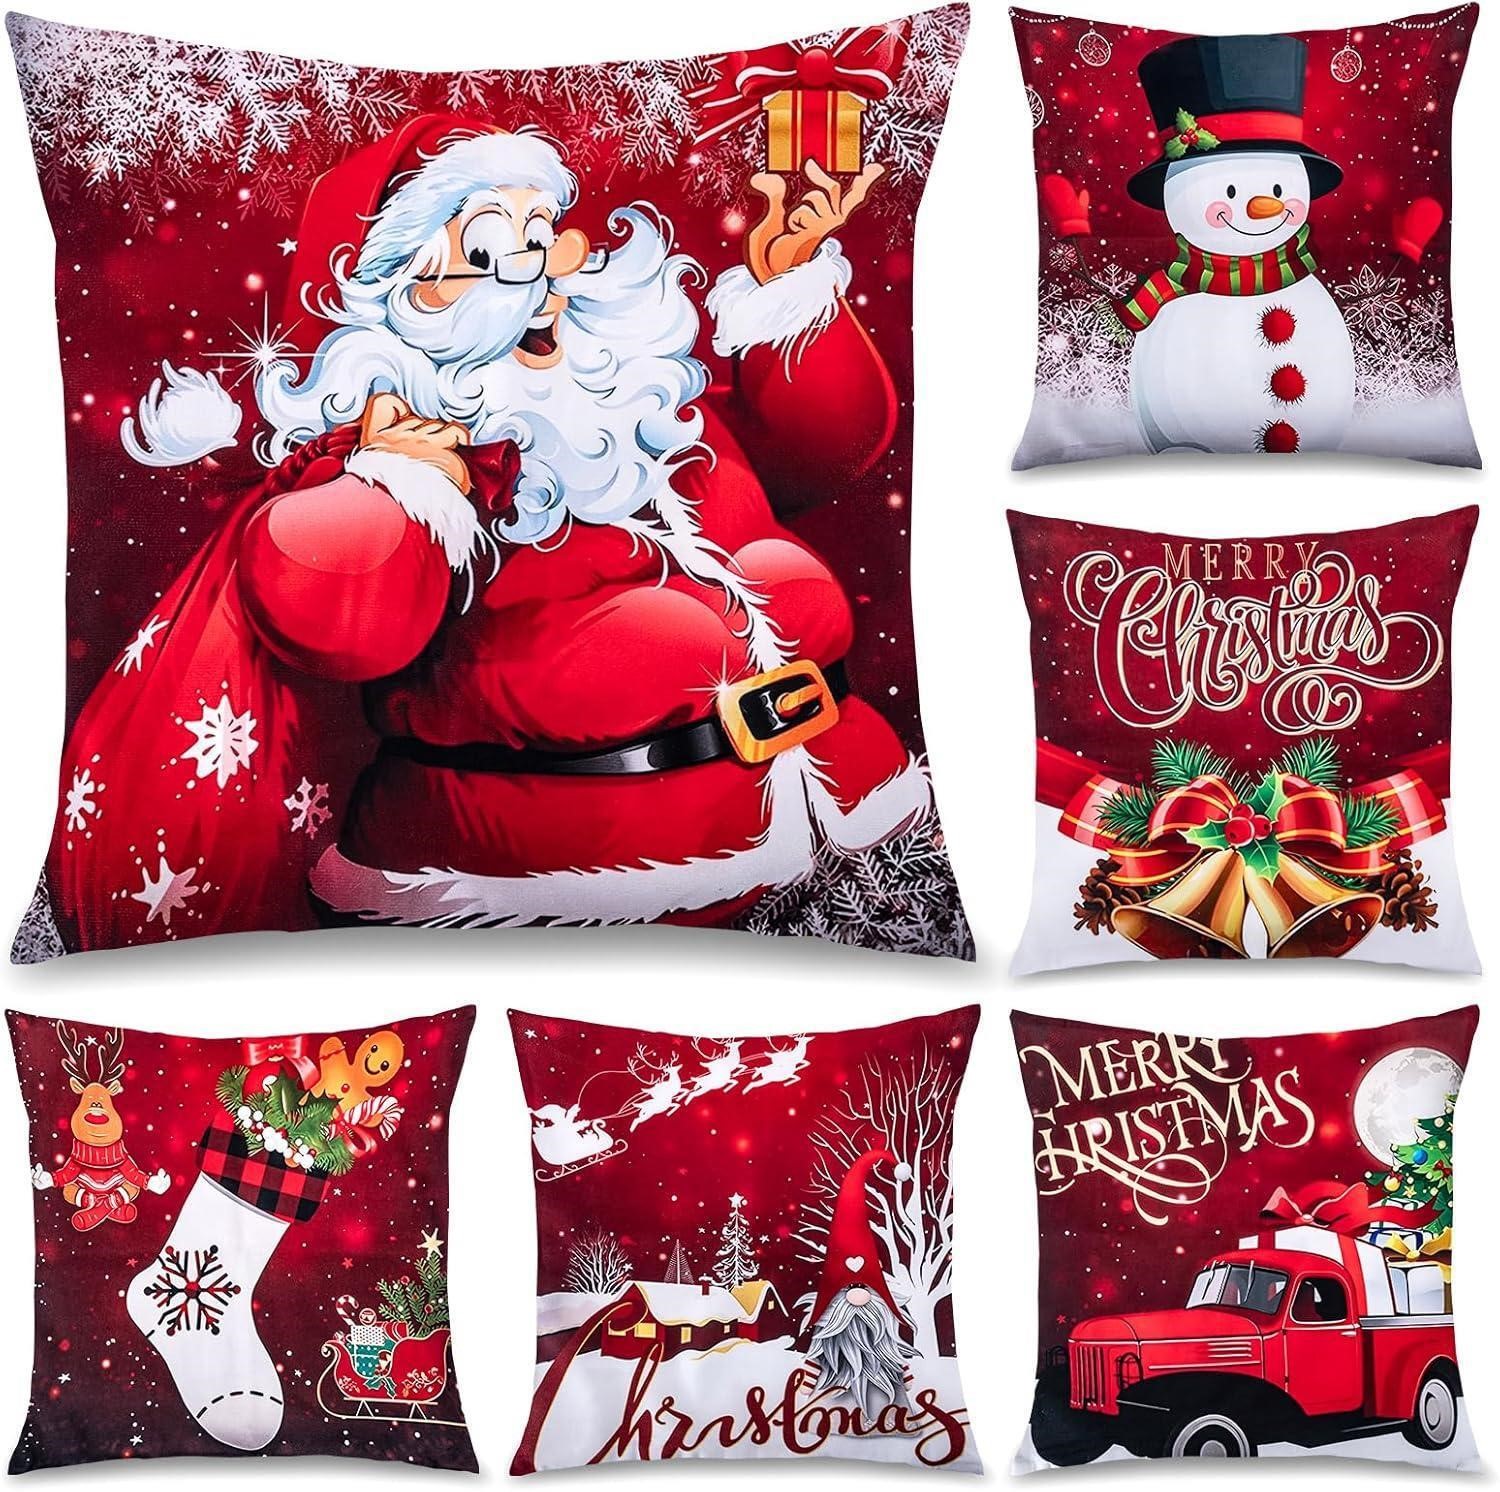 Matymats 50x50cm Christmas Cushion Cover x2